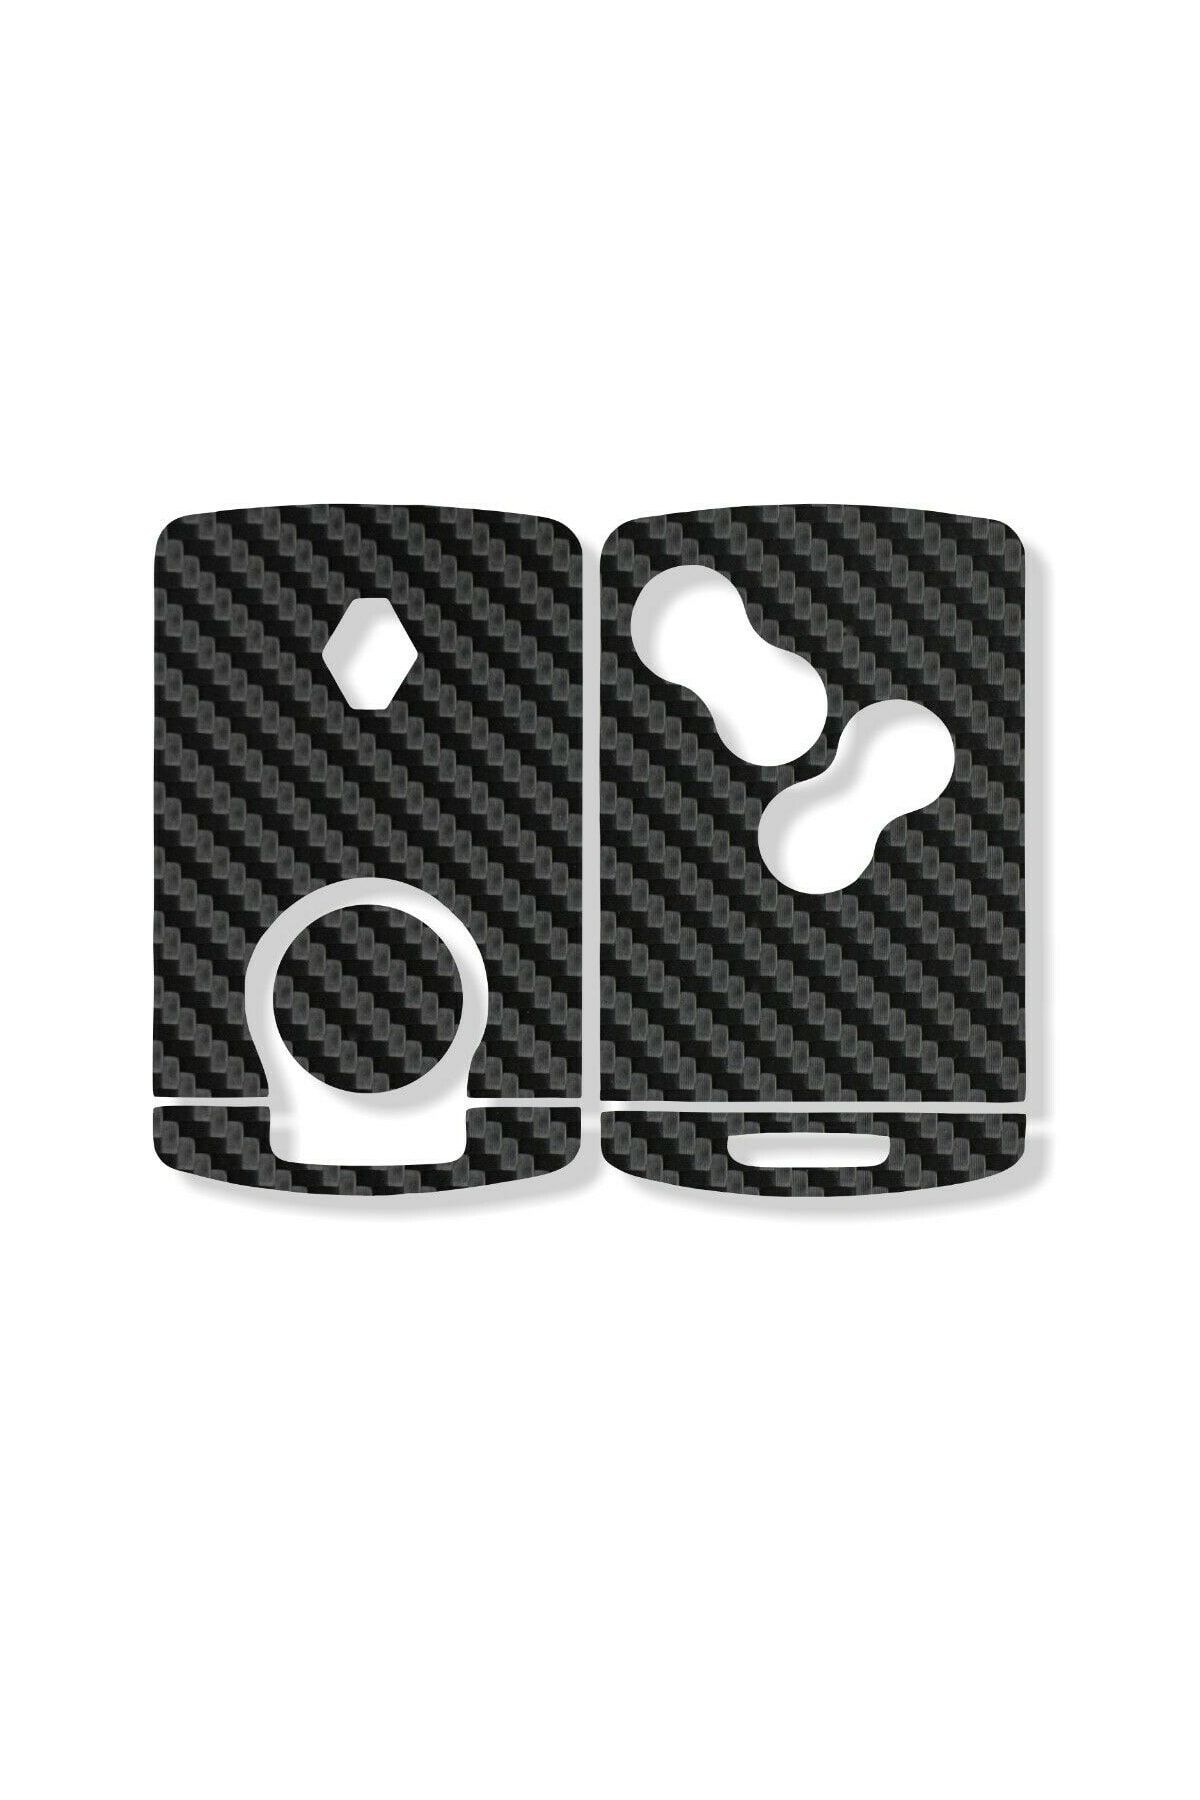 GRAFİCAR Renault Clio4 - Megane 3 - Fluance Anahtar Kart Folyo Sticker Kaplama / Mat Karbon Siyah